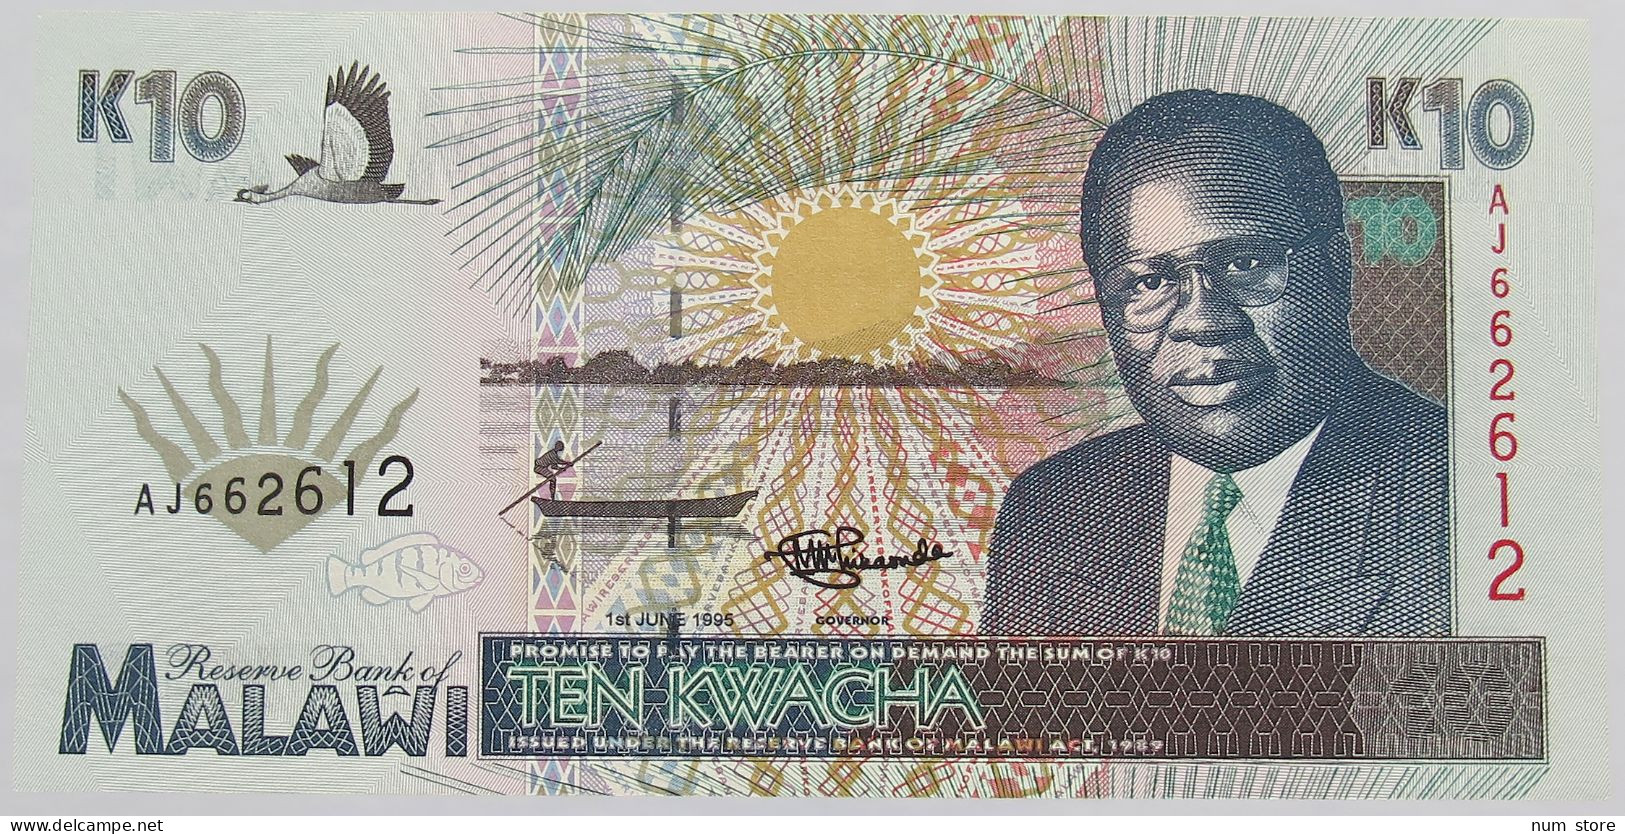 MALAWI 10 KWACHA 1995 UNC #alb018 0211 - Malawi